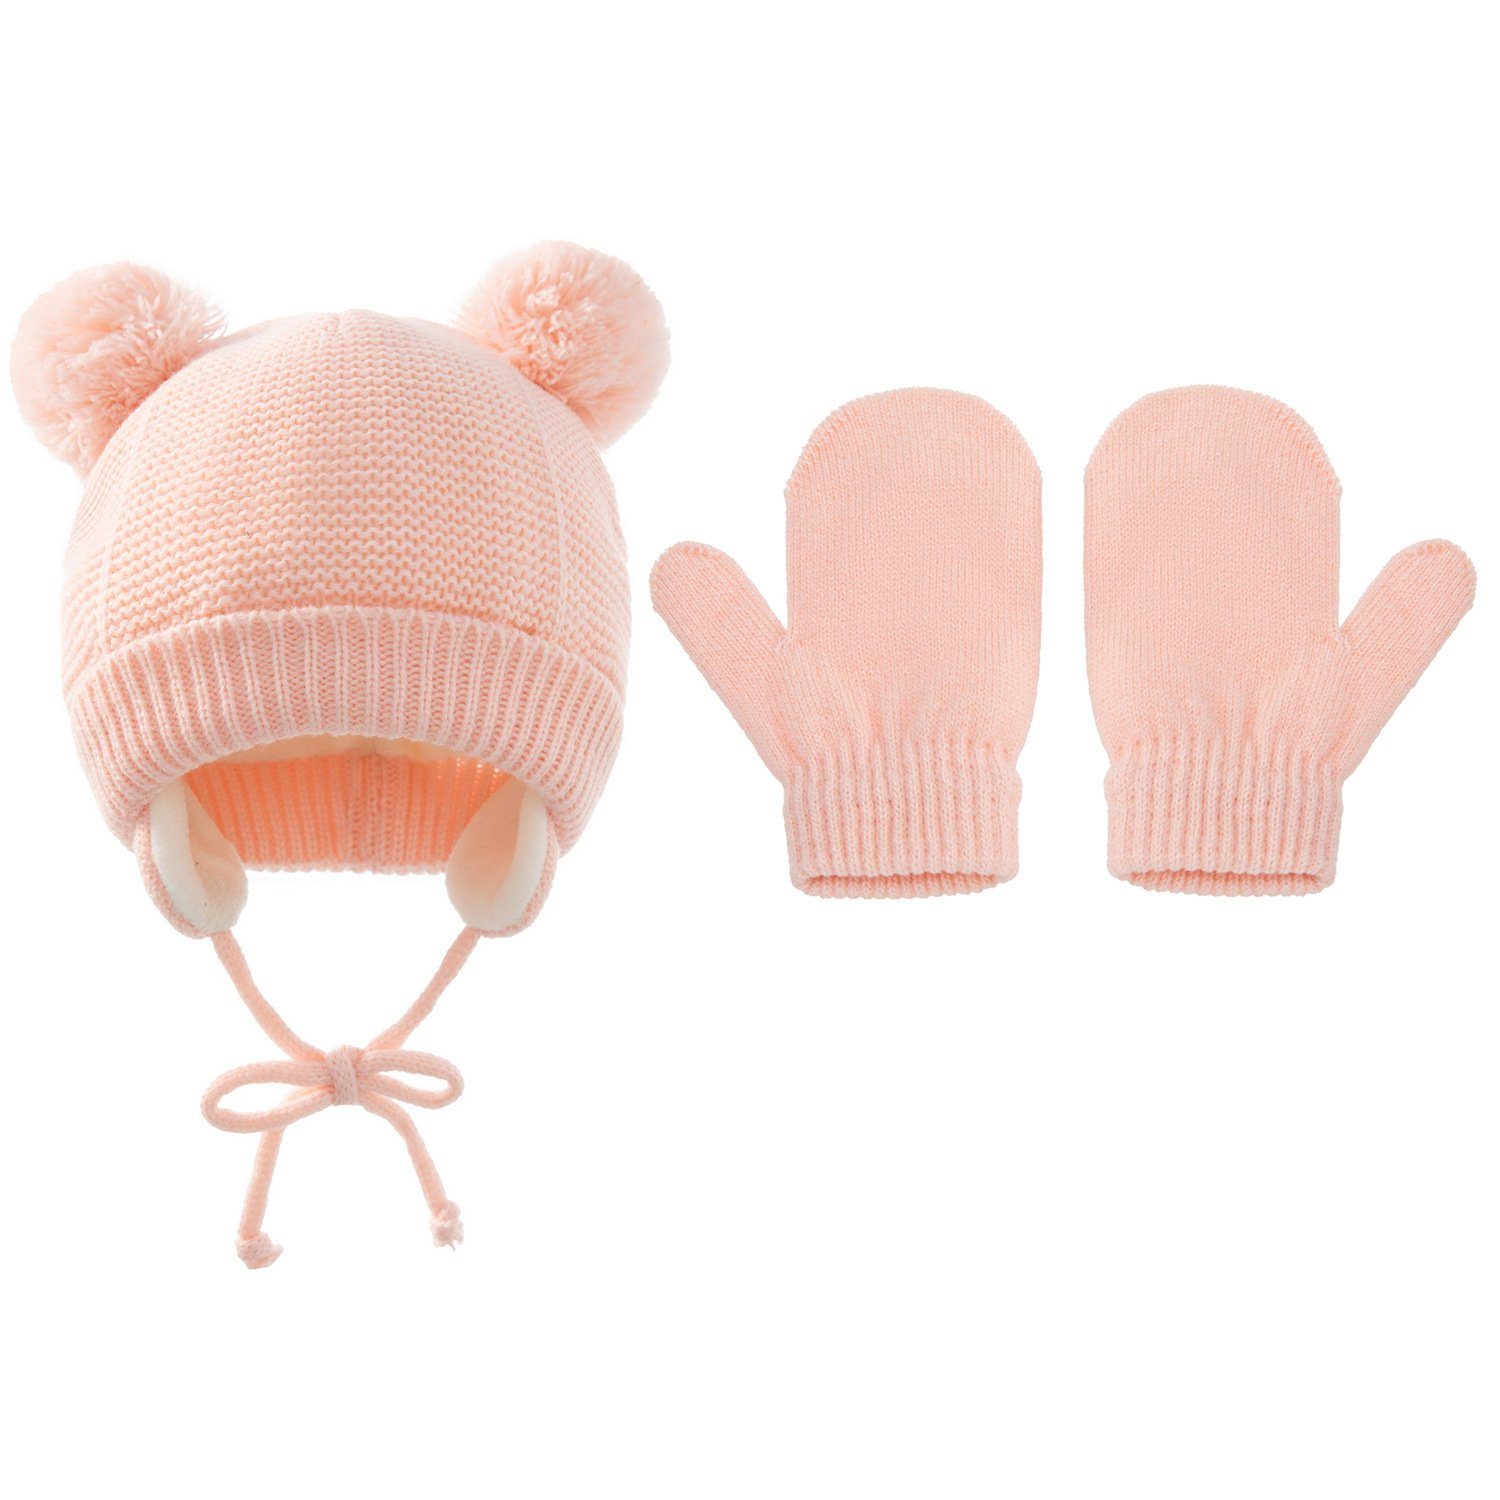 XDeer Filzhut 2 Stück Kinder Wintermütze Handschuhe Set, Strickmütze baby warme Mütze pink